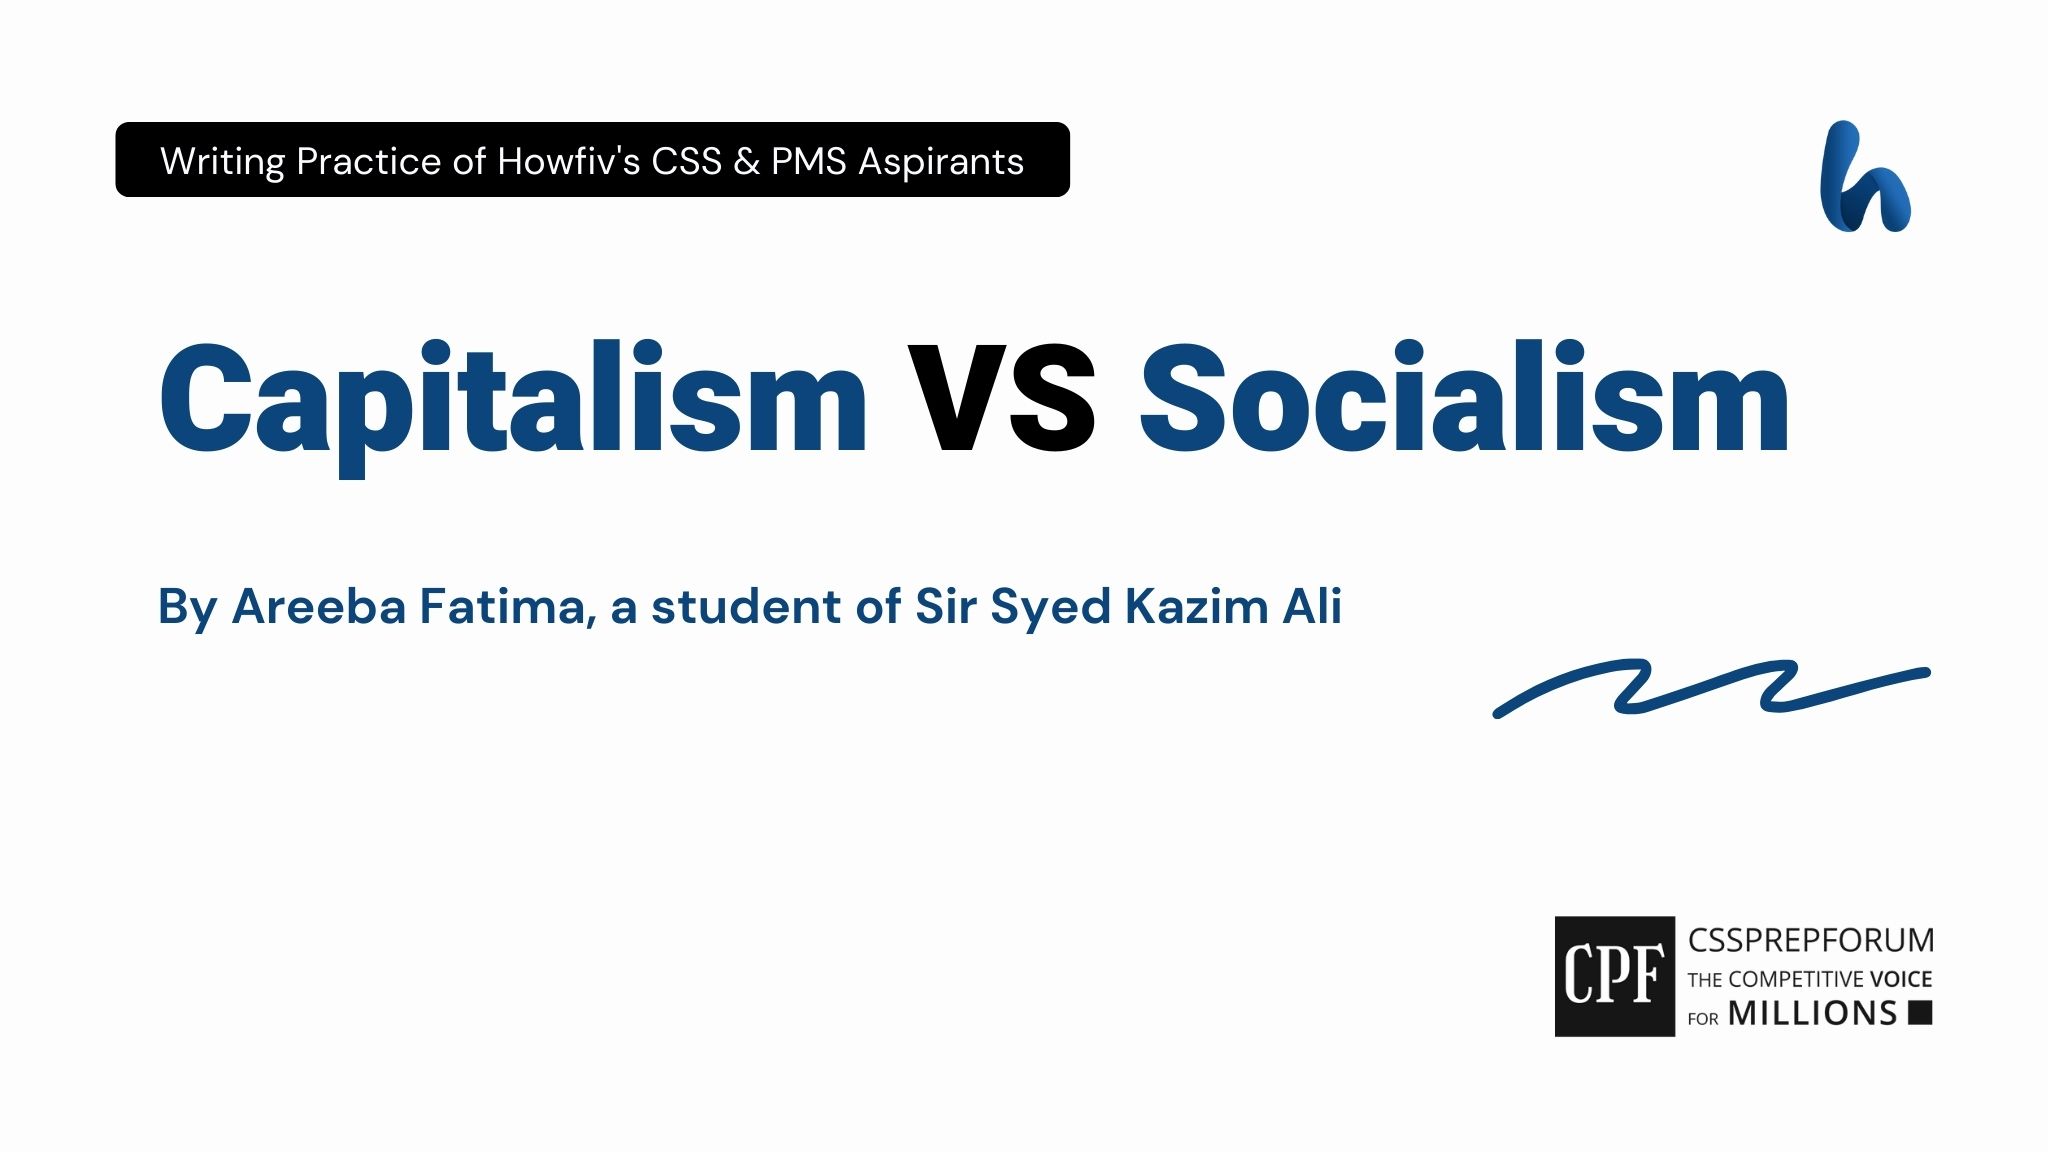 Capitalism VS Socialism by Areeba Fatima